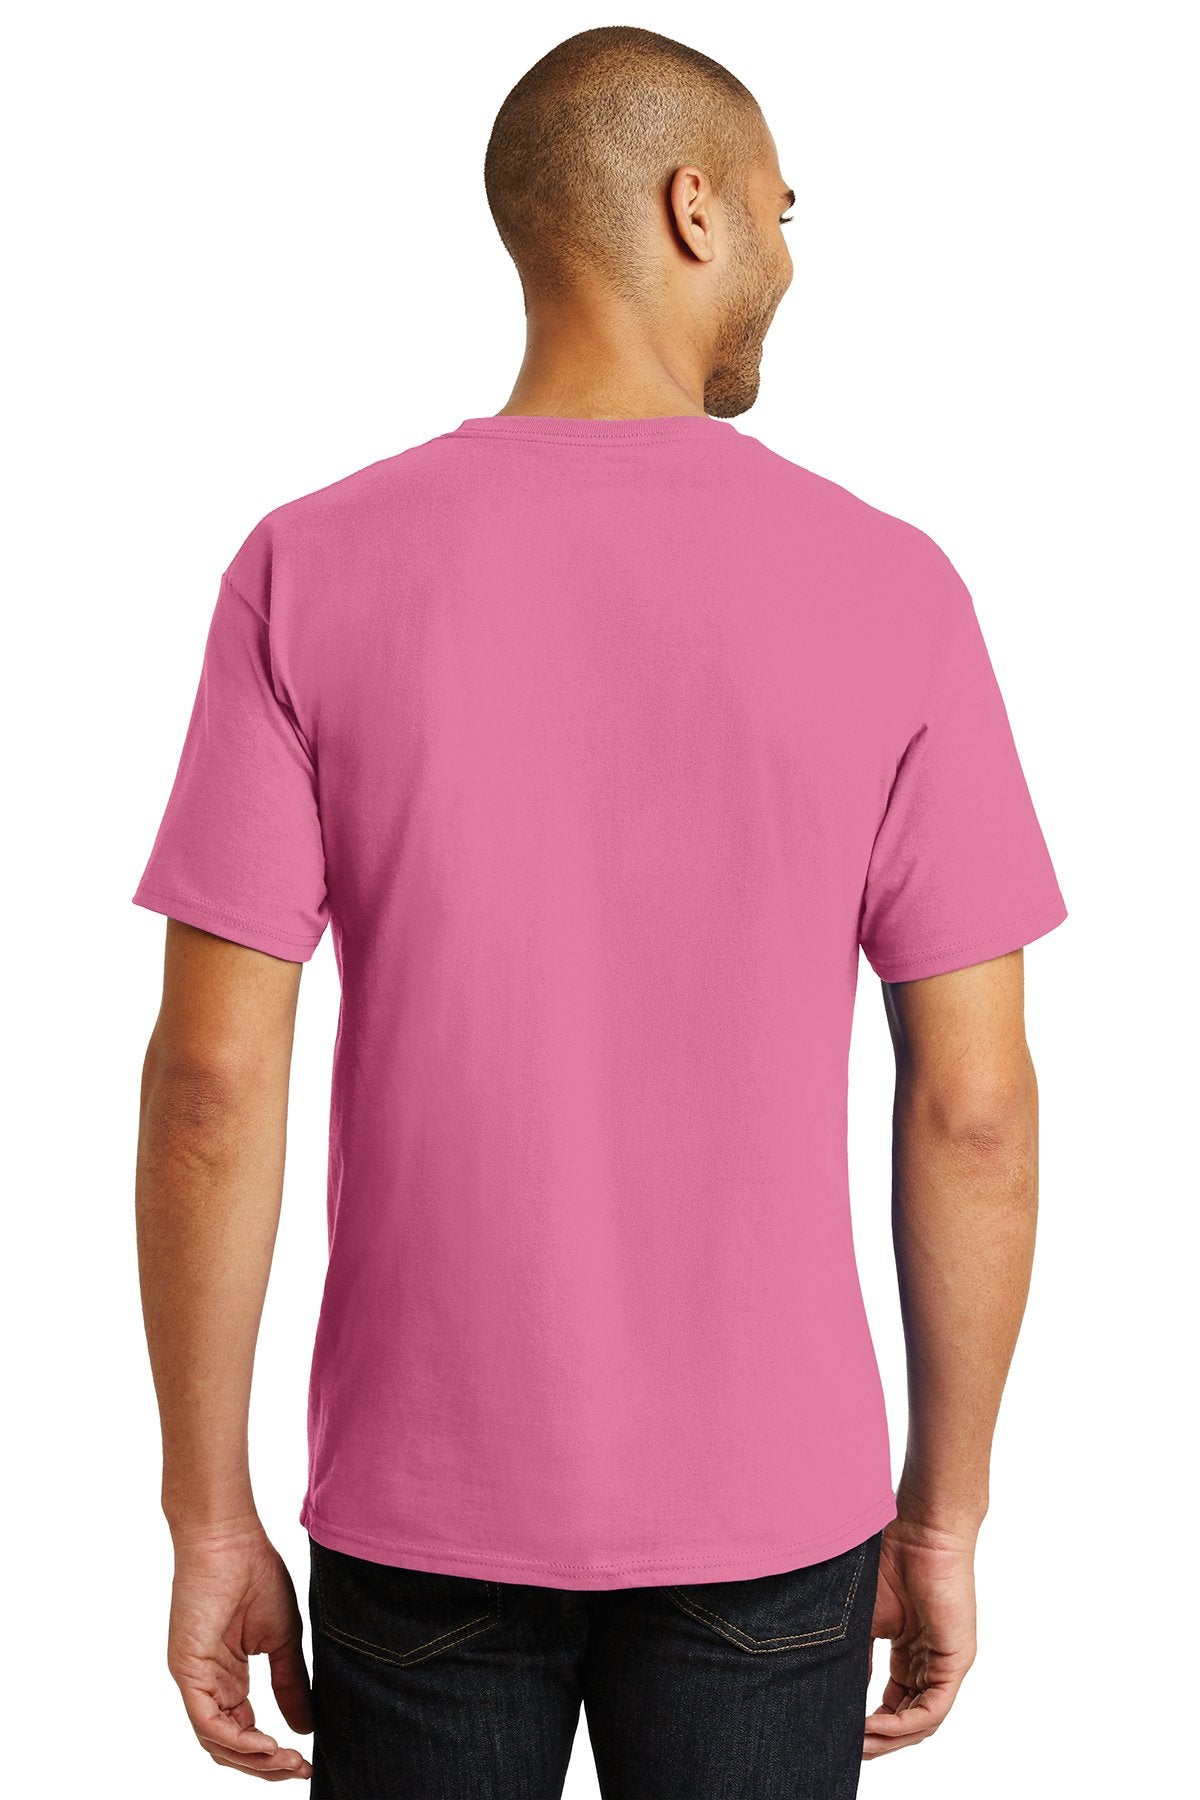 hanes tagless cotton t shirt 5250 pink